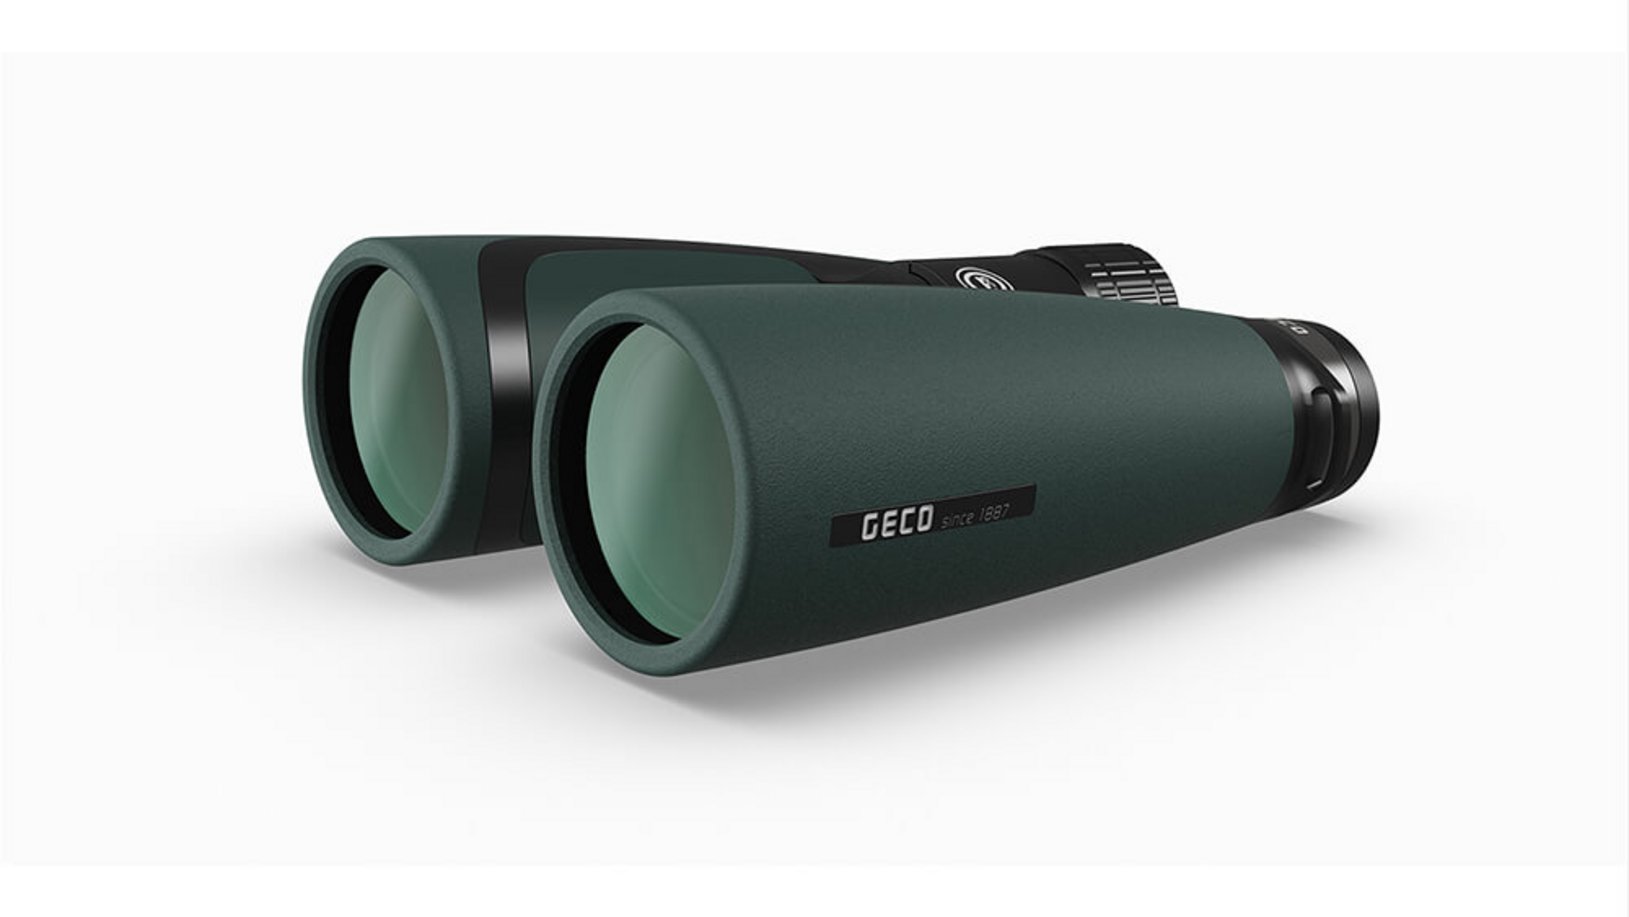 Image of the GECO Binocular 8x56 Green in standing position